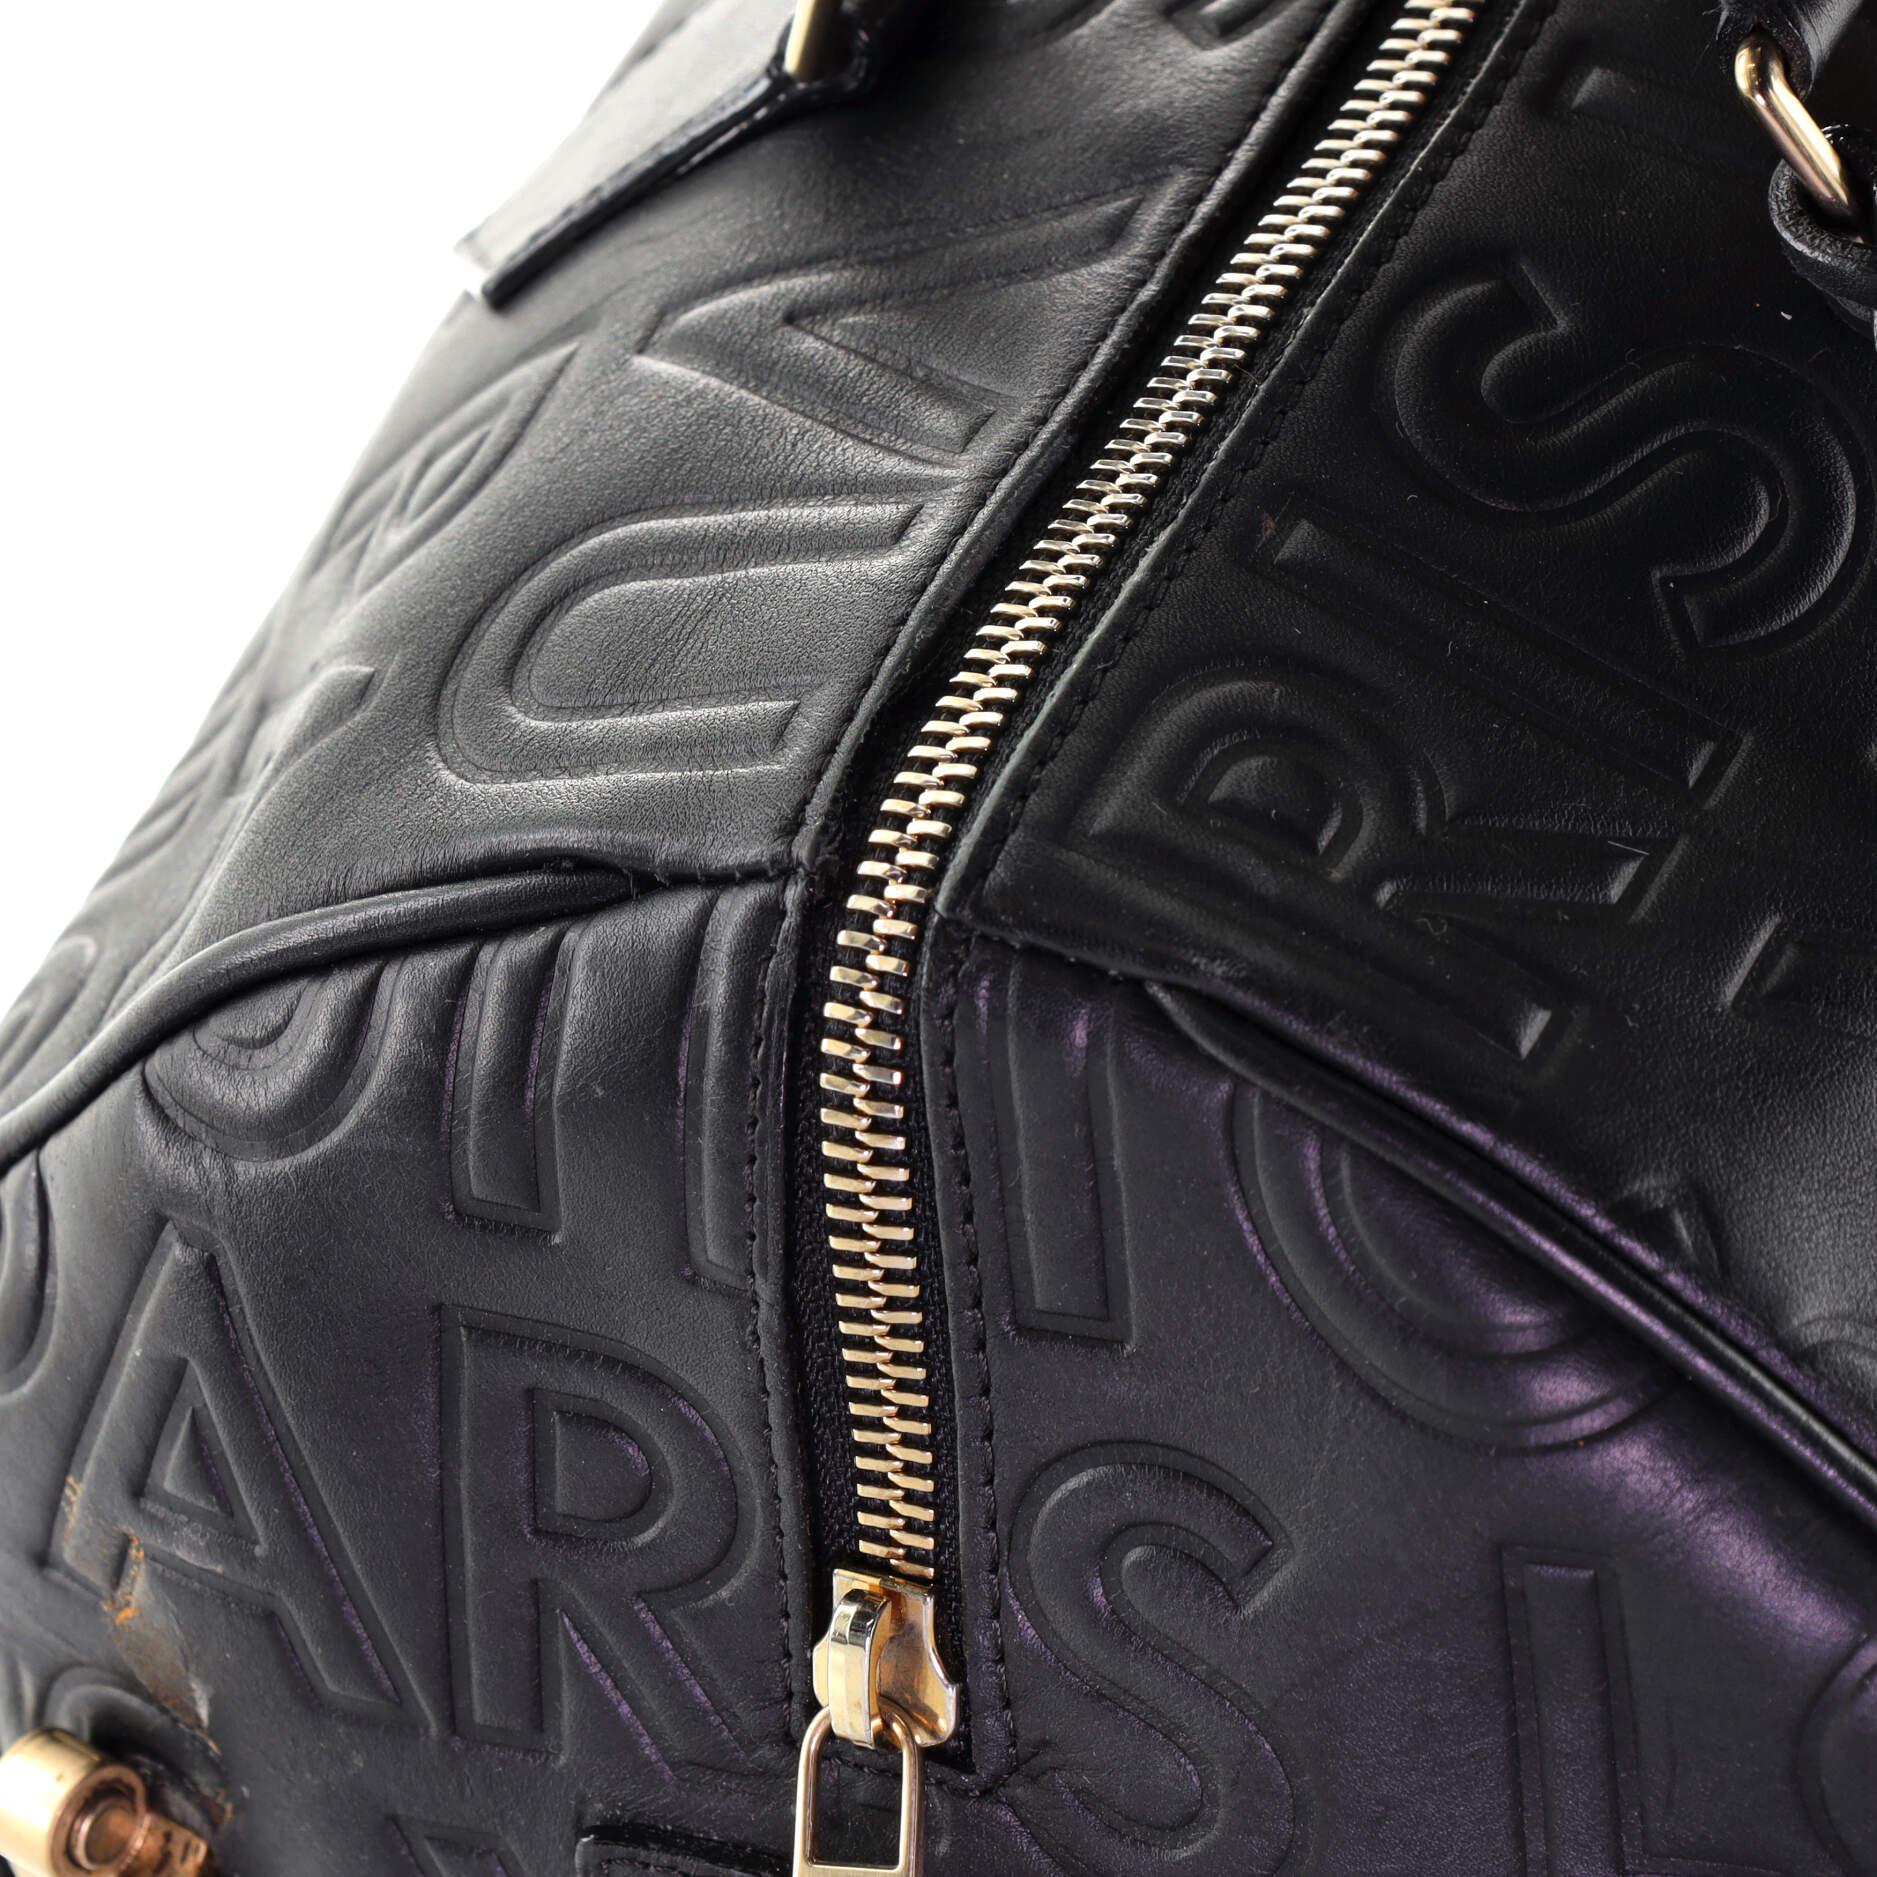 Women's or Men's Louis Vuitton Paris Speedy Cube Bag Embossed Leather 30